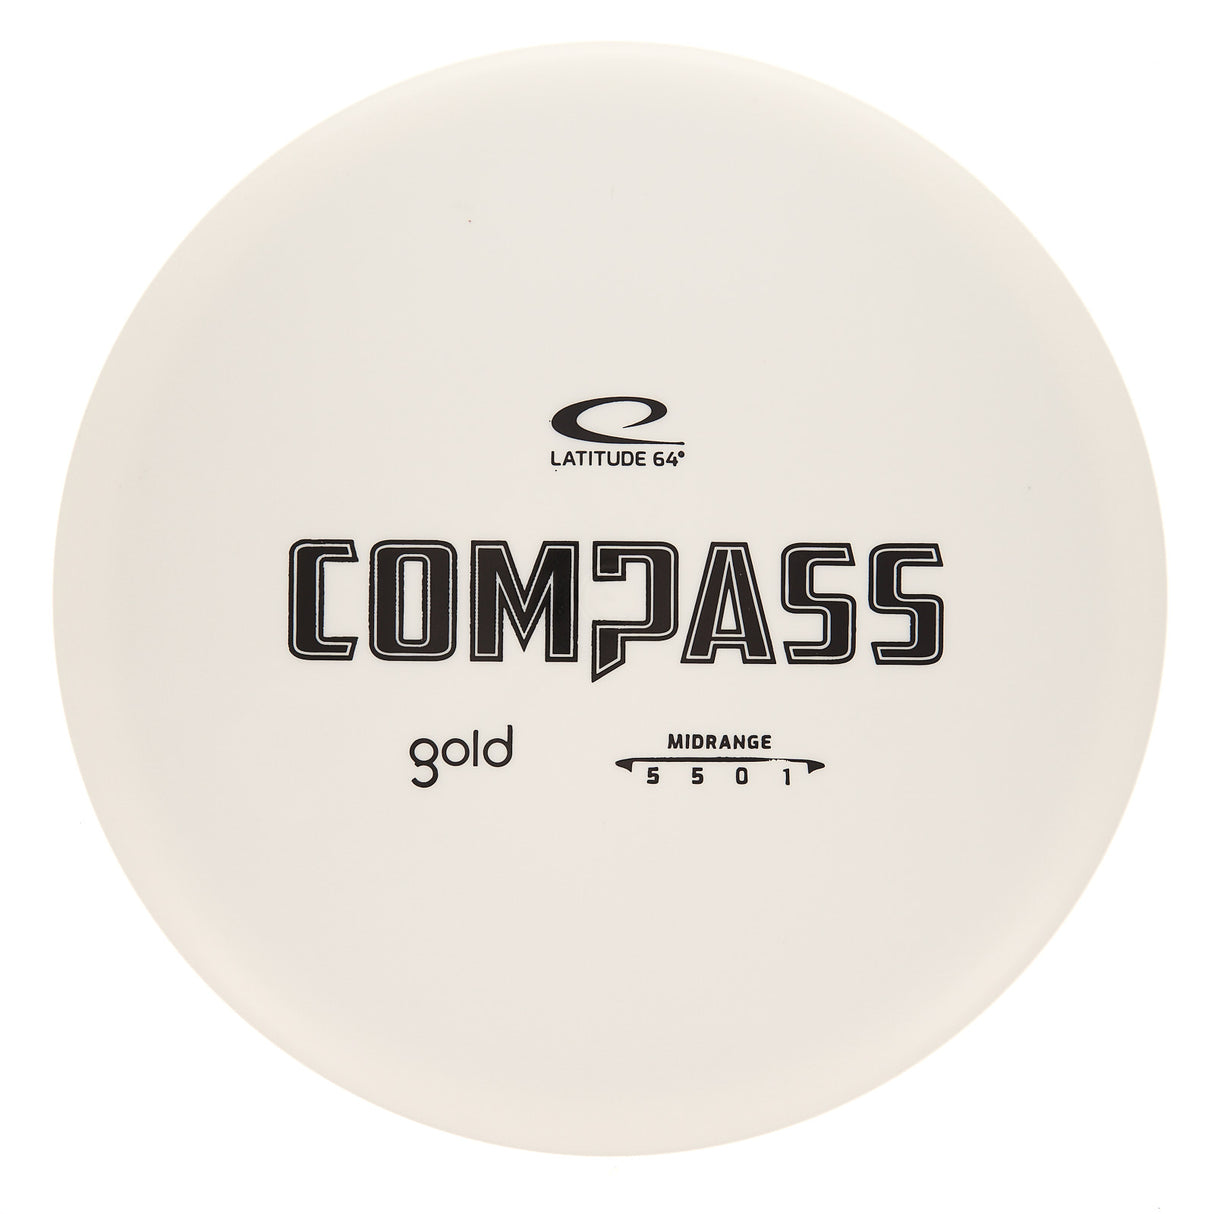 Latitude 64 Compass - Gold 169g | Style 0001